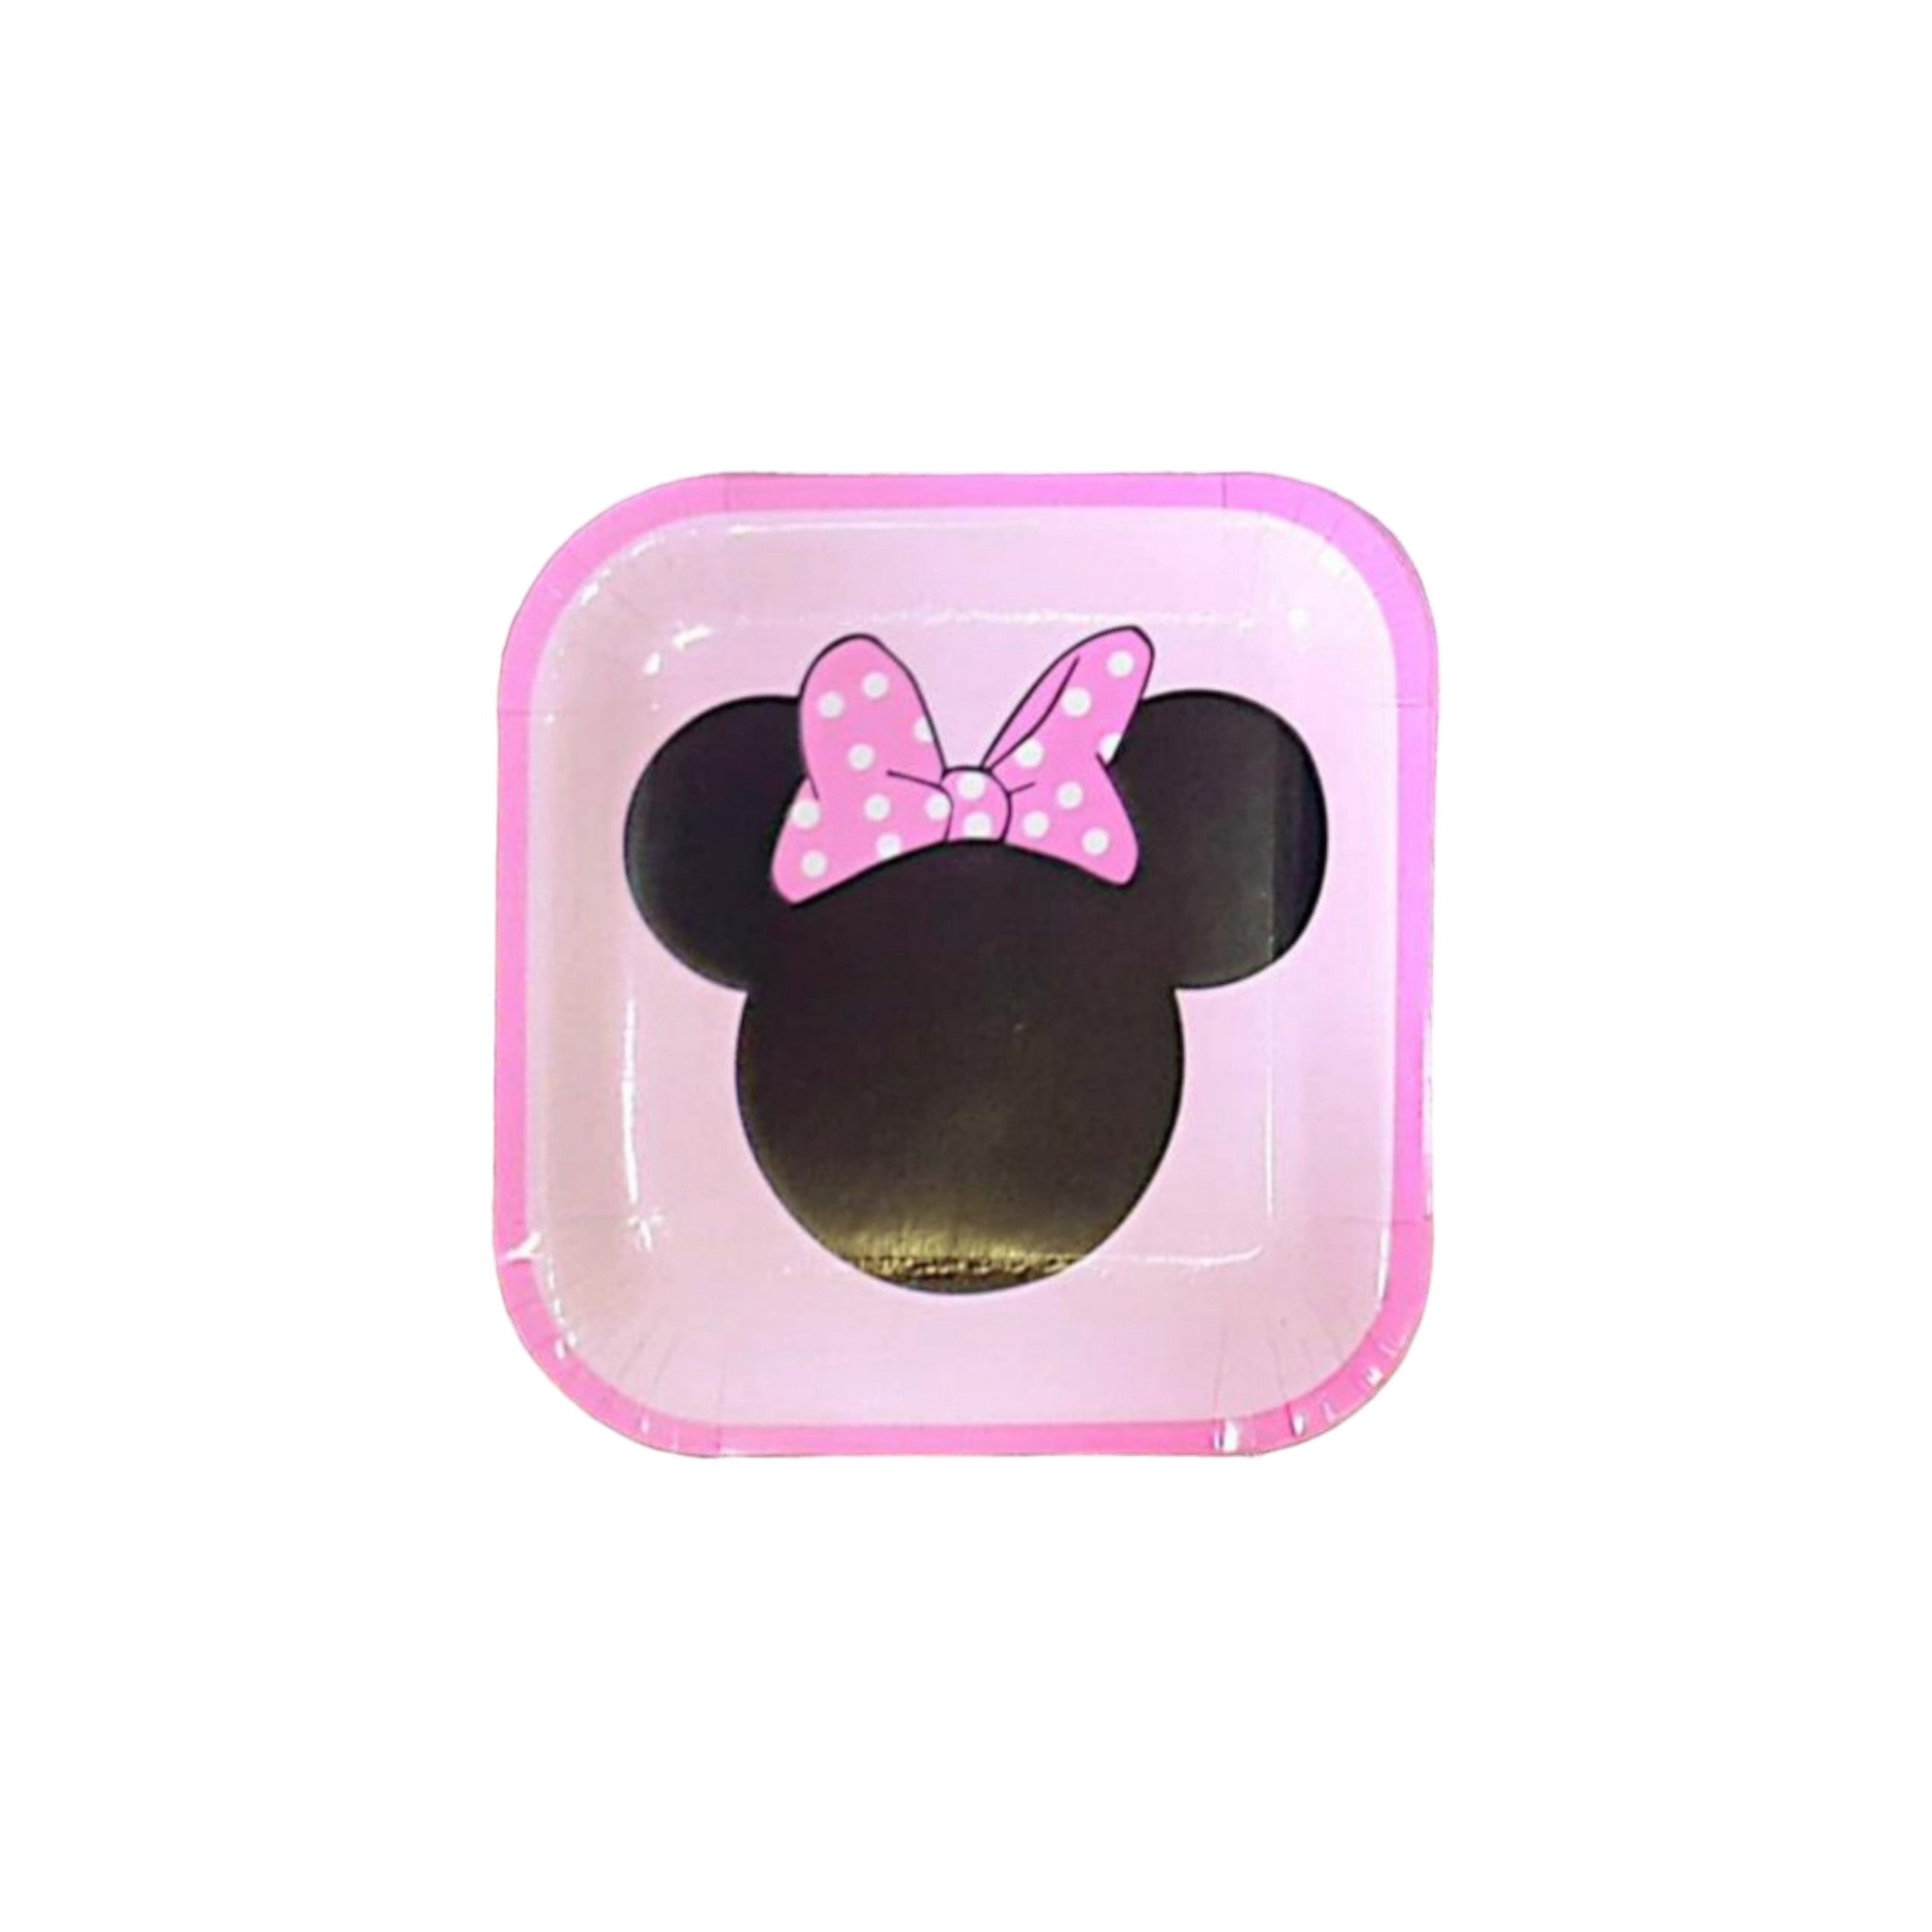 Disney Minnie Mouse Party Paper Plates Square 7inch 10pcs